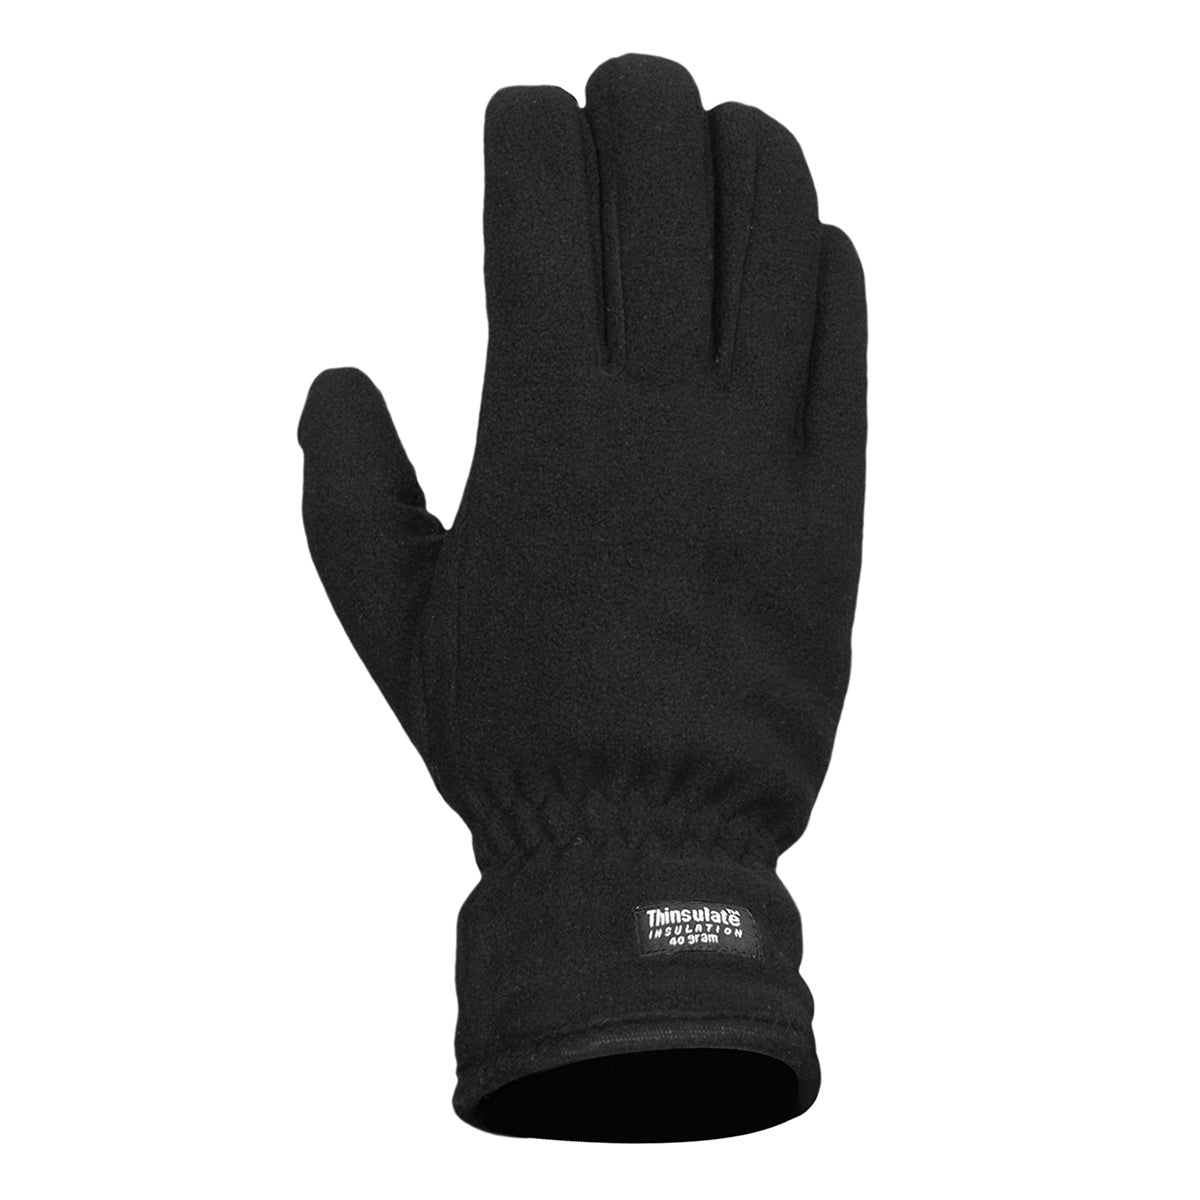 Gravel Gear Men's Tech Fleece Gloves with Thinsulate — Black